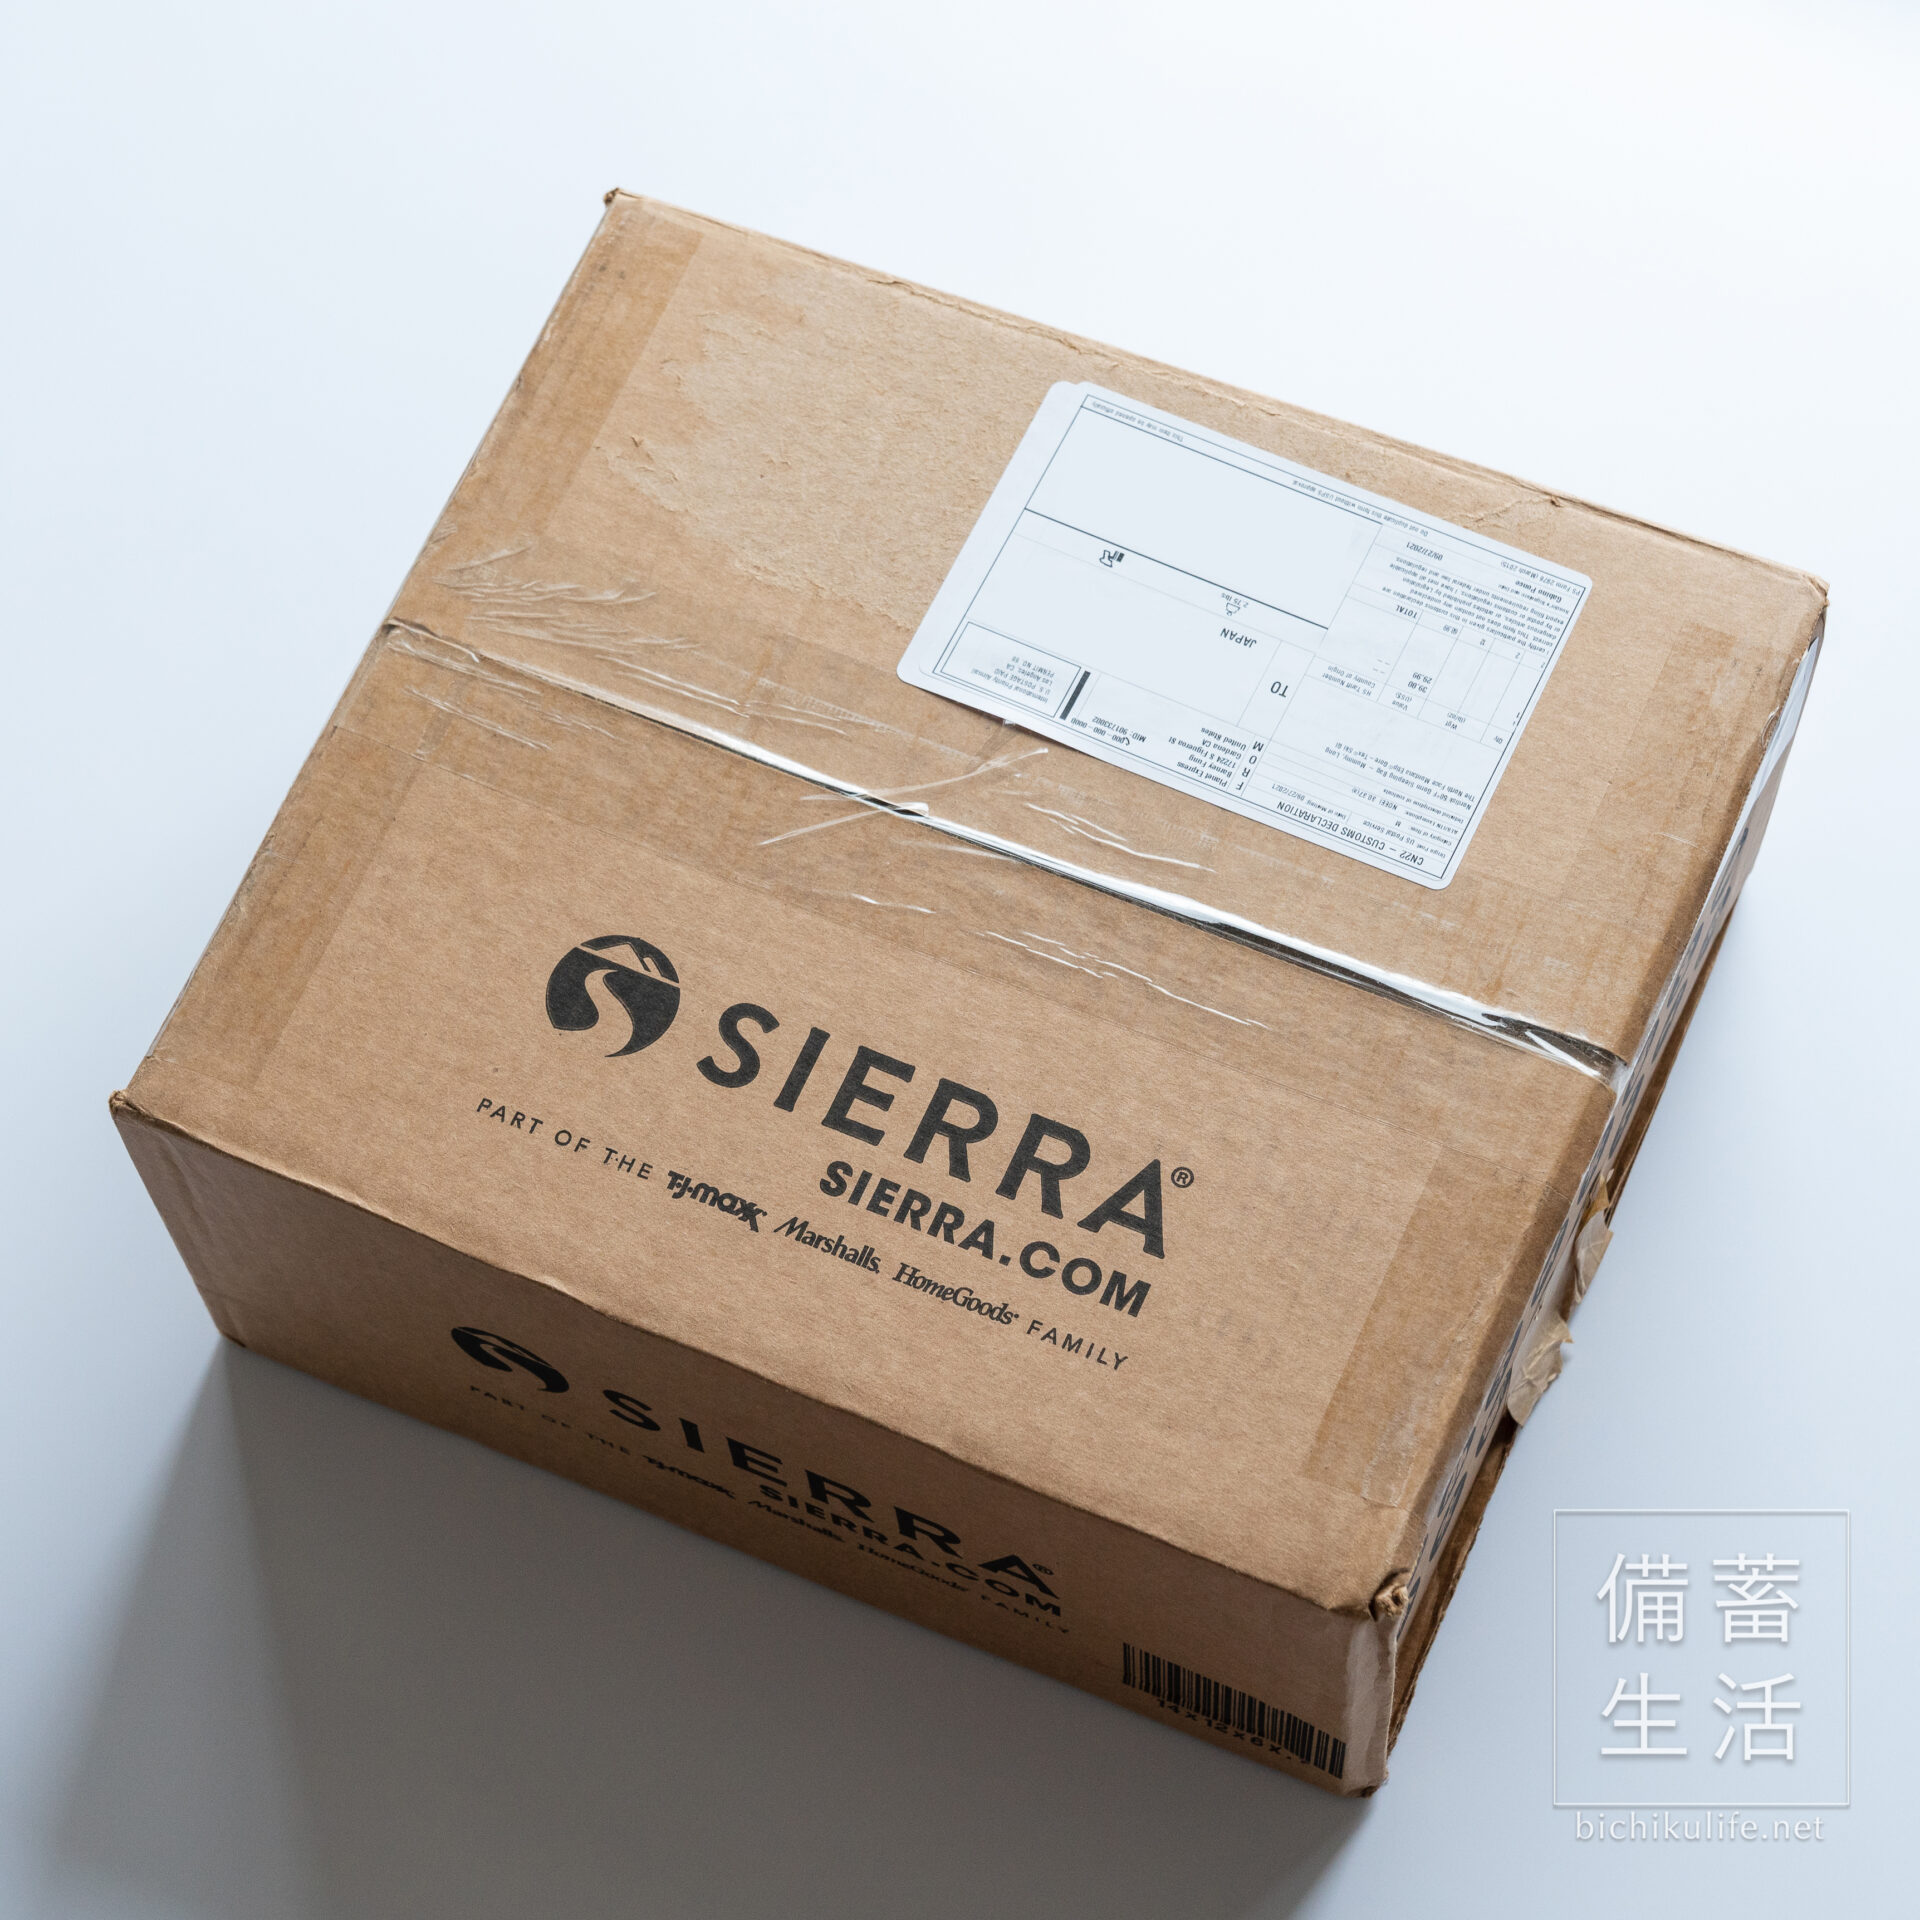 SIERRA 注文した商品が日本に到着